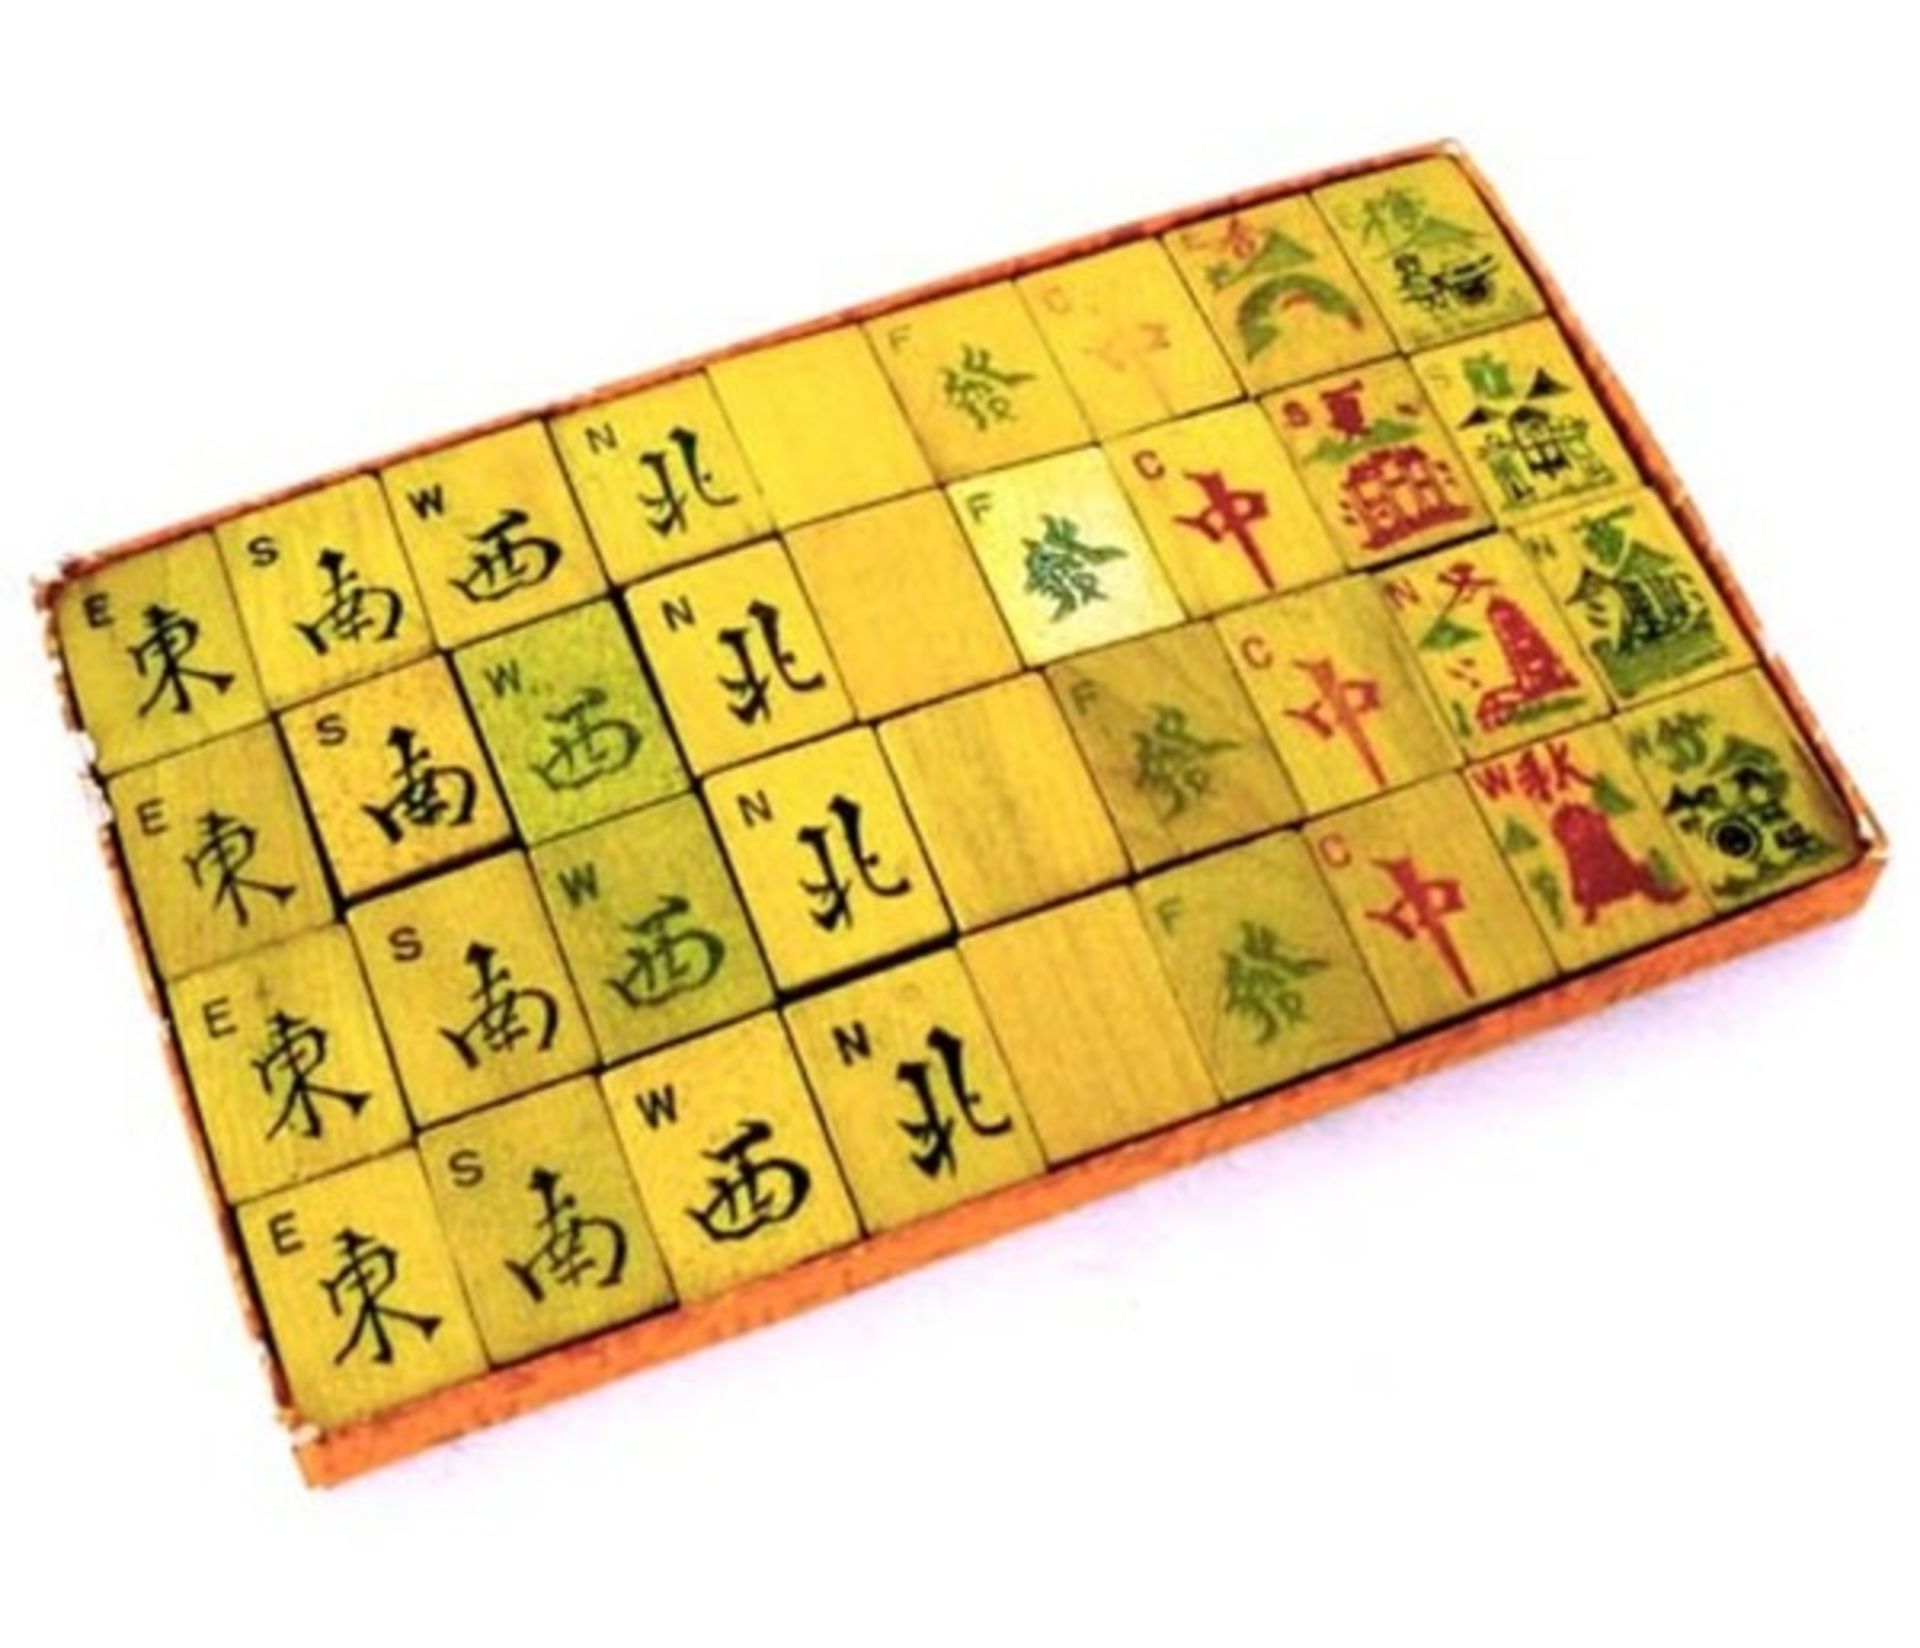 (Mahjong) Mahjong The Hillson Company Boston, Ma Chiang versie, jaren '20 - Bild 6 aus 13